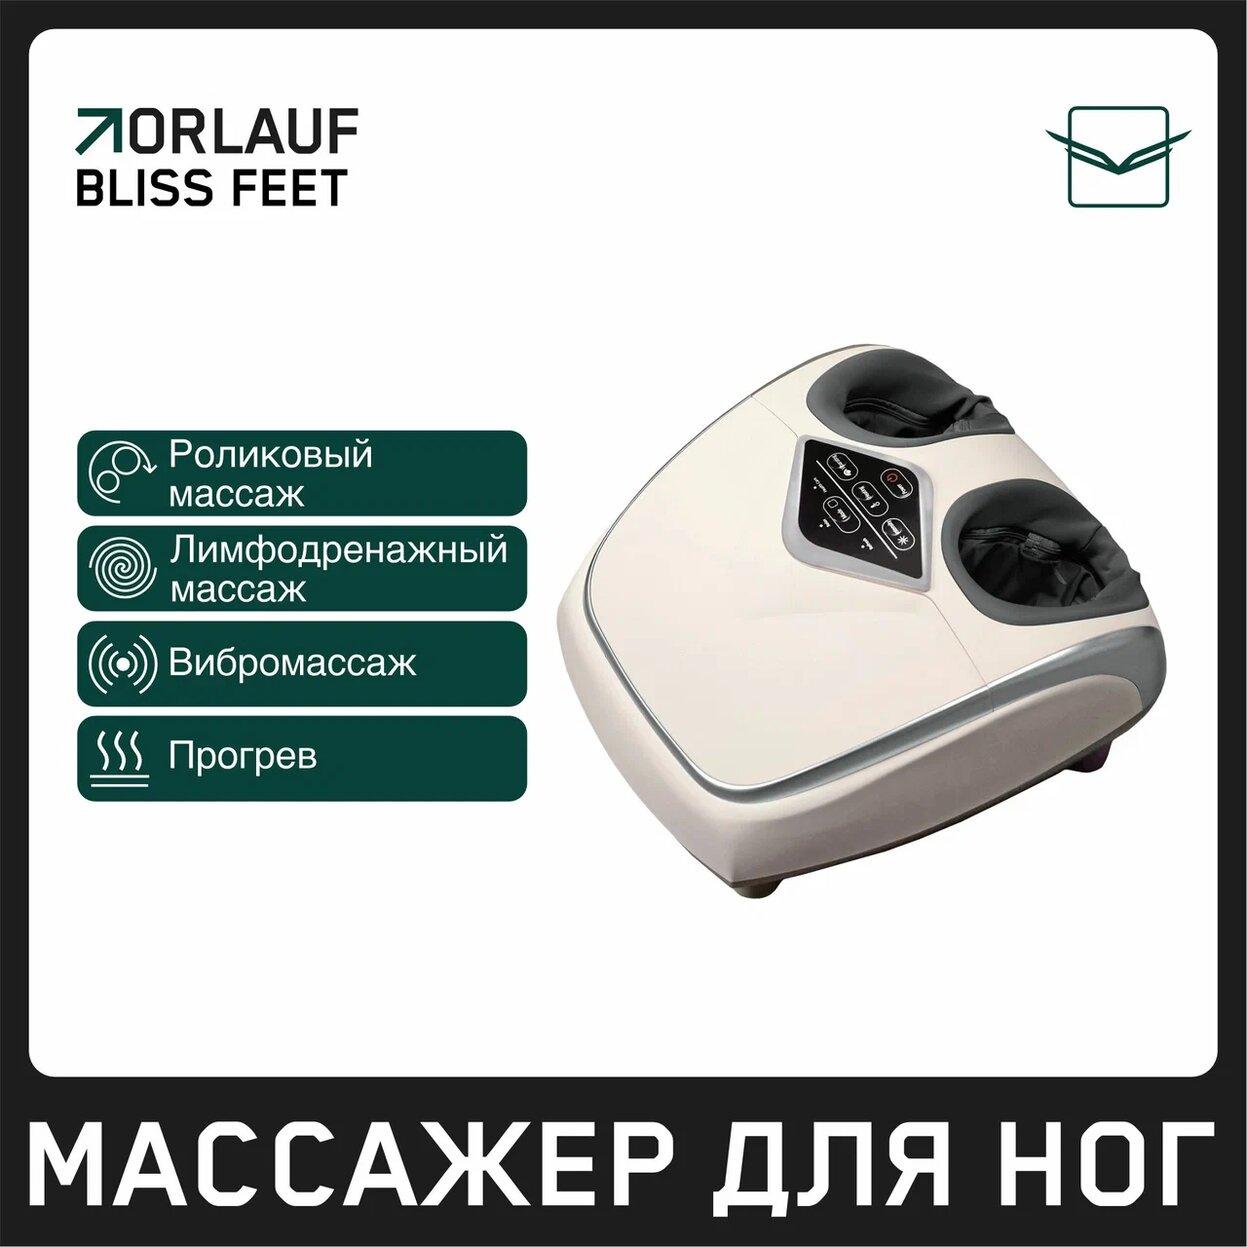 Orlauf Bliss Feet из каталога массажеров для ног в Челябинске по цене 27600 ₽